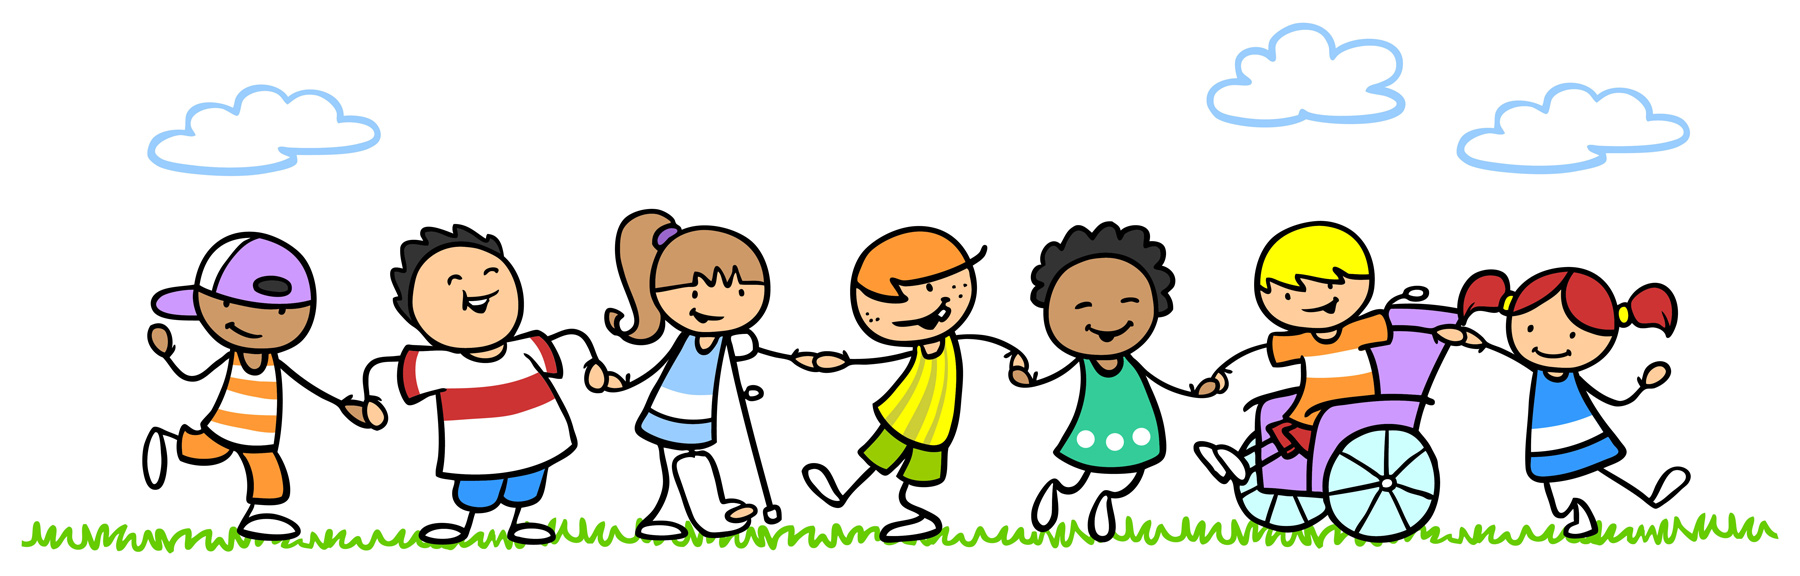 Diverse Cartoon Children holding hands